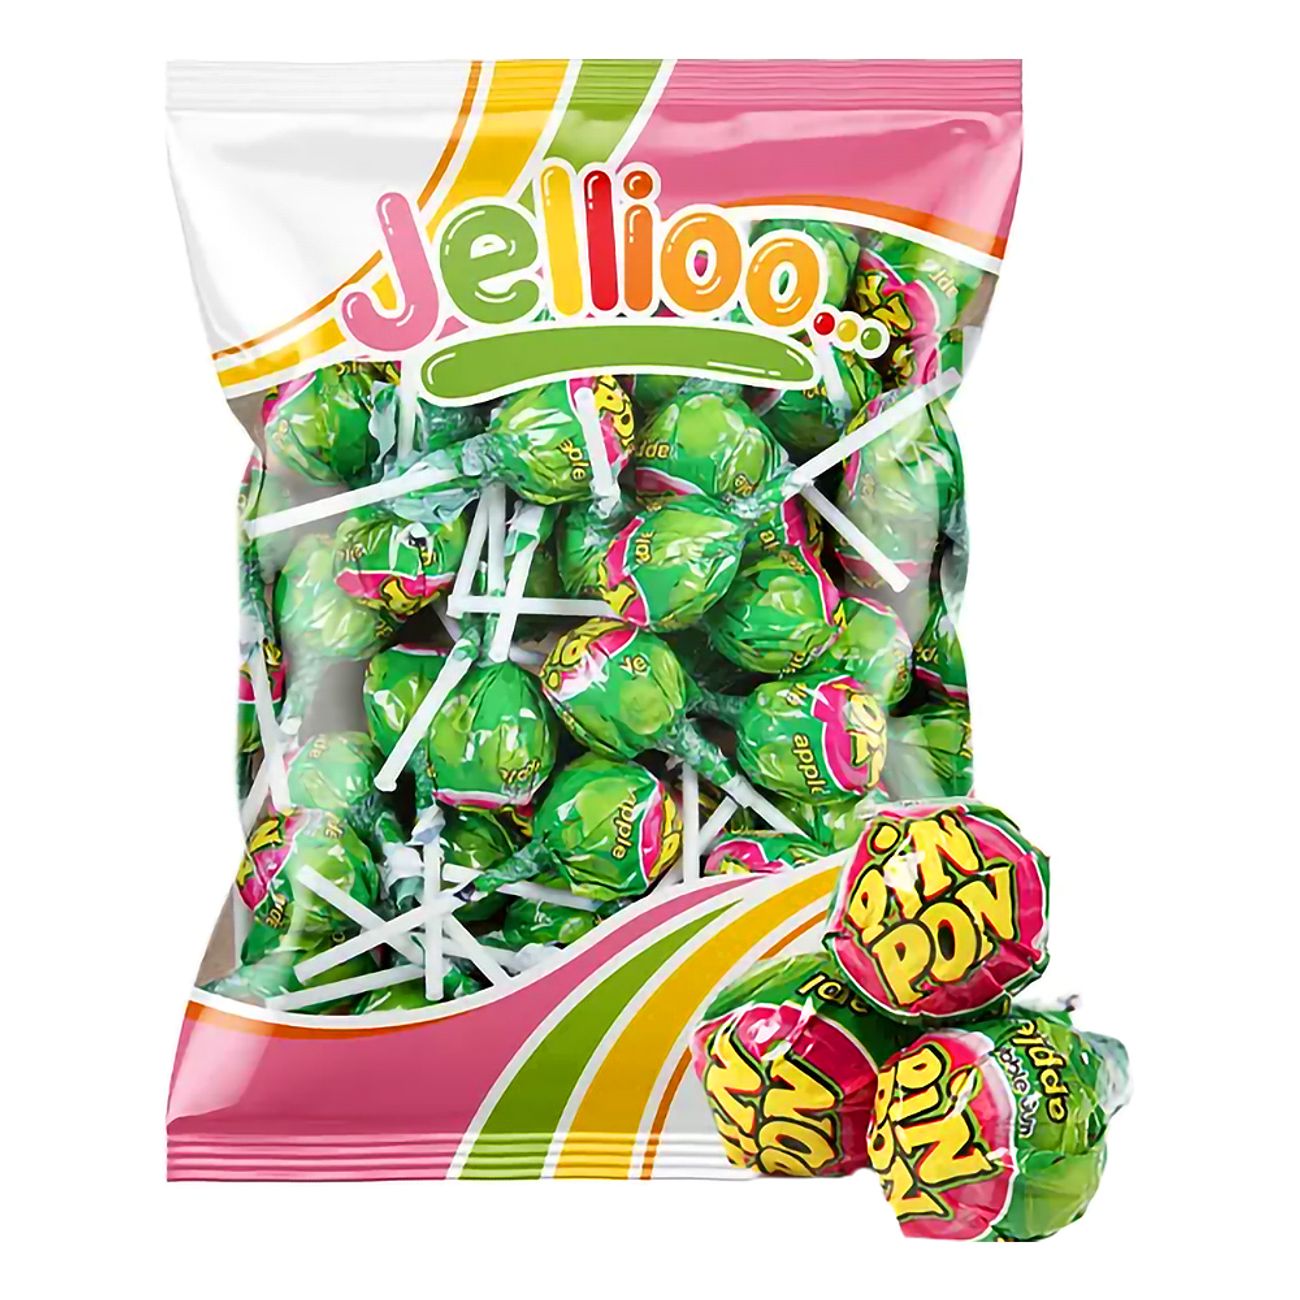 pin-pon-lollipop-gum-sour-green-apple-storpack-103124-1